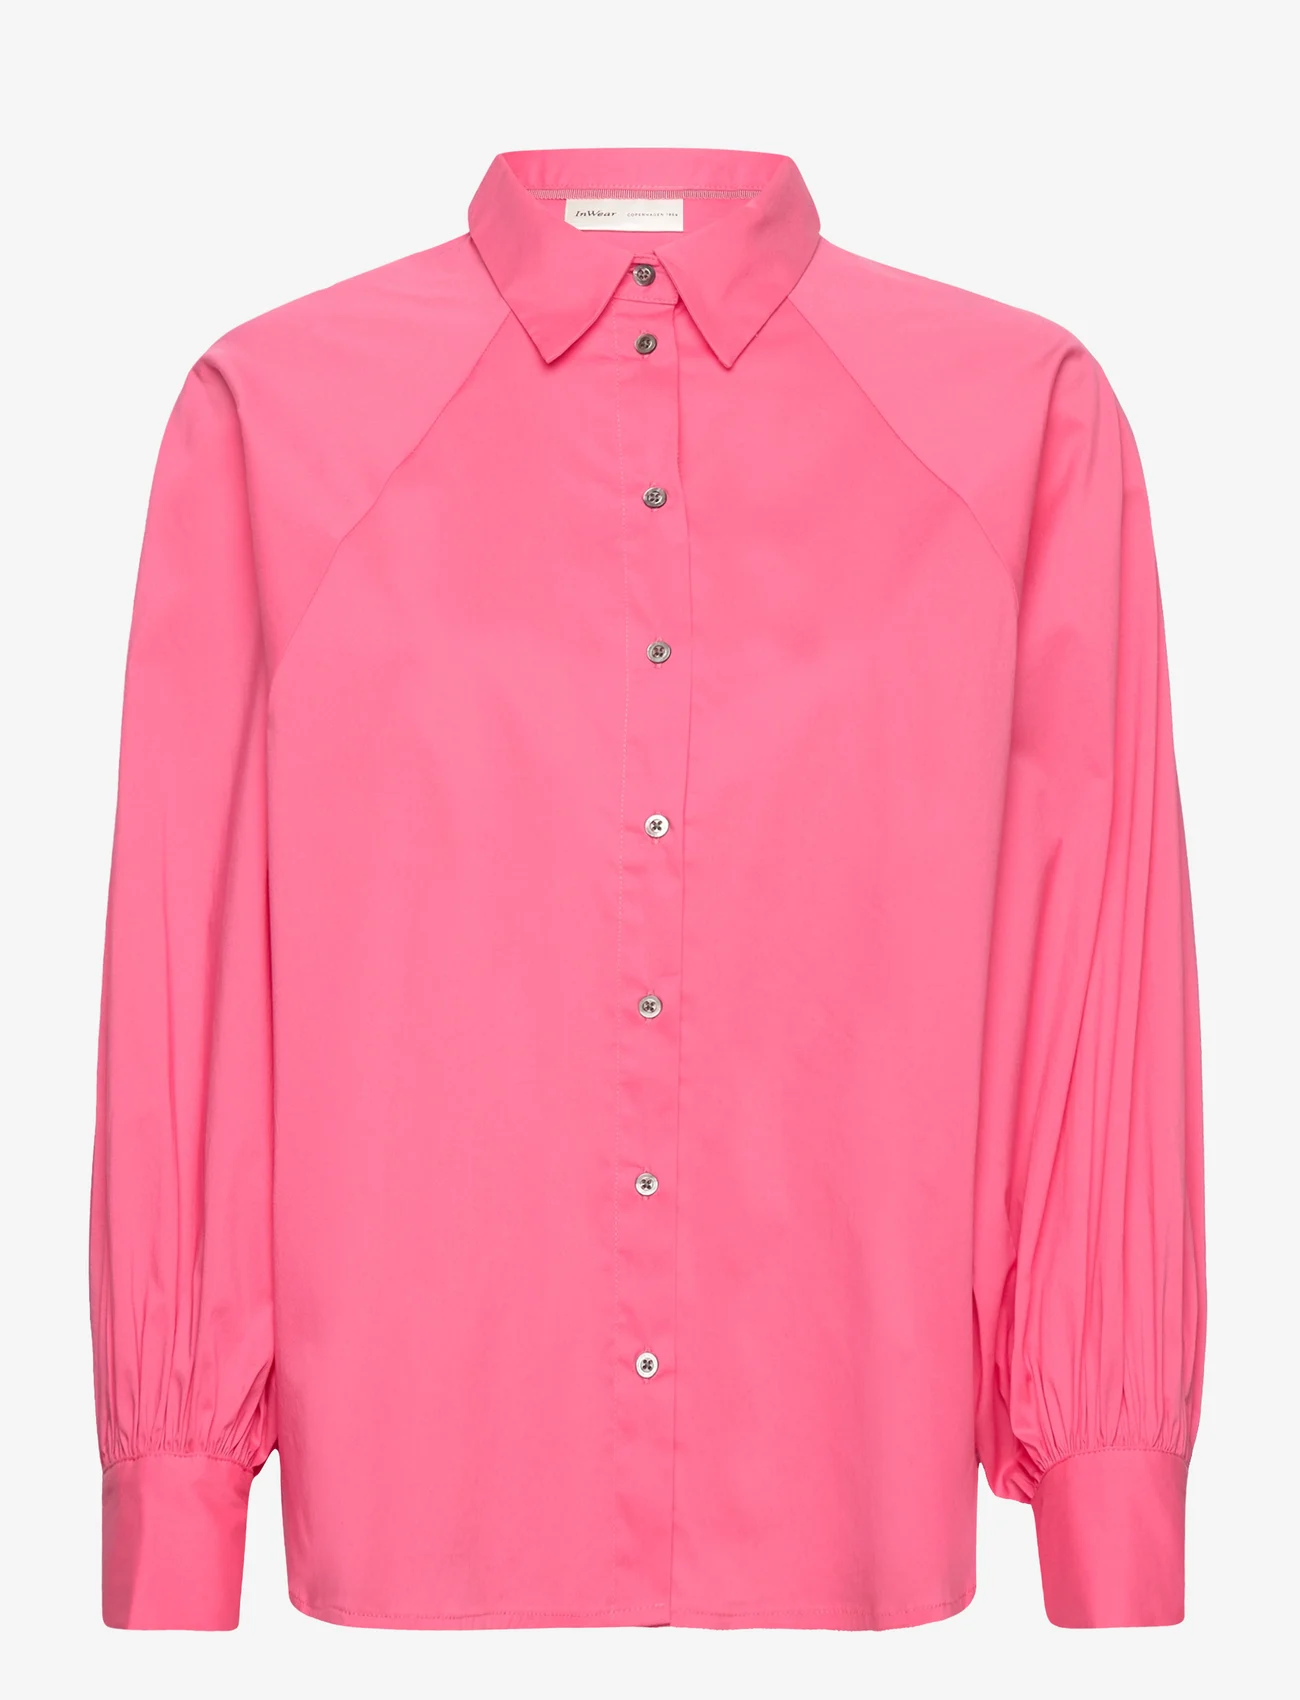 InWear - DilliamIW Shirt - langærmede skjorter - pink rose - 0